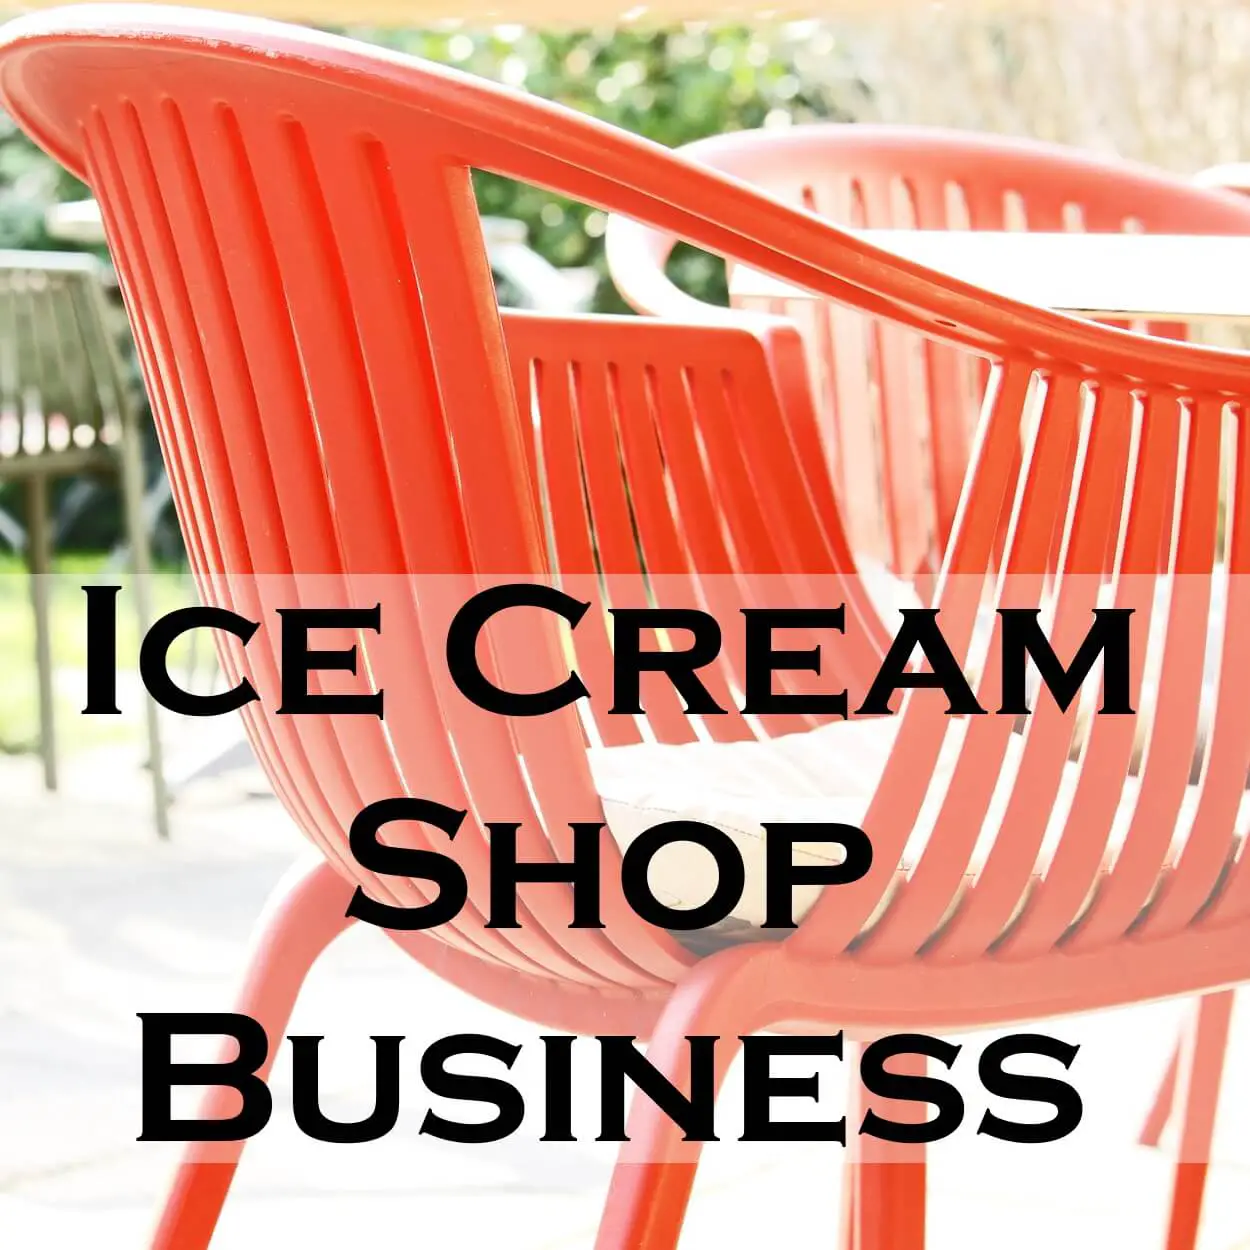 Ice Cream Shop Business